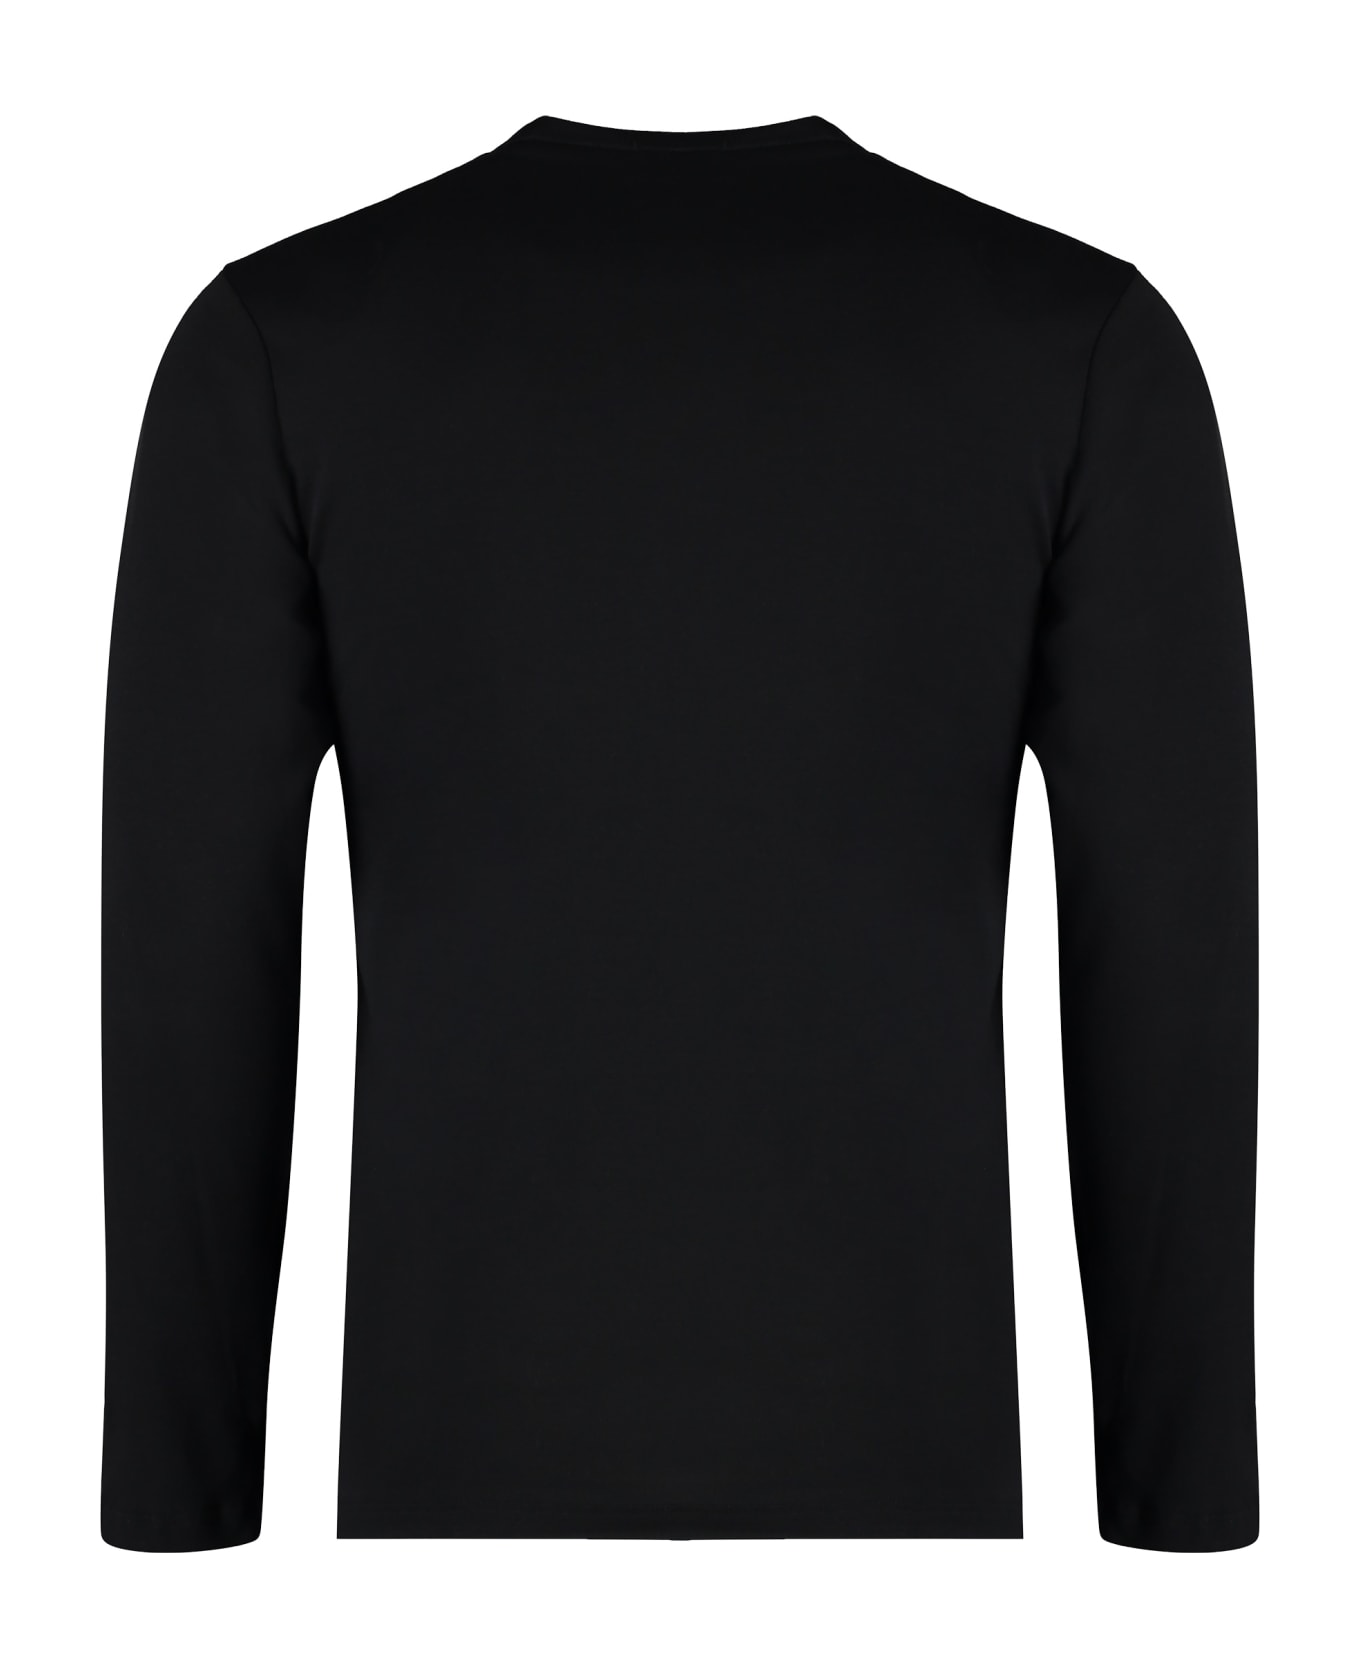 Tom Ford Cotton Crew-neck T-shirt - black